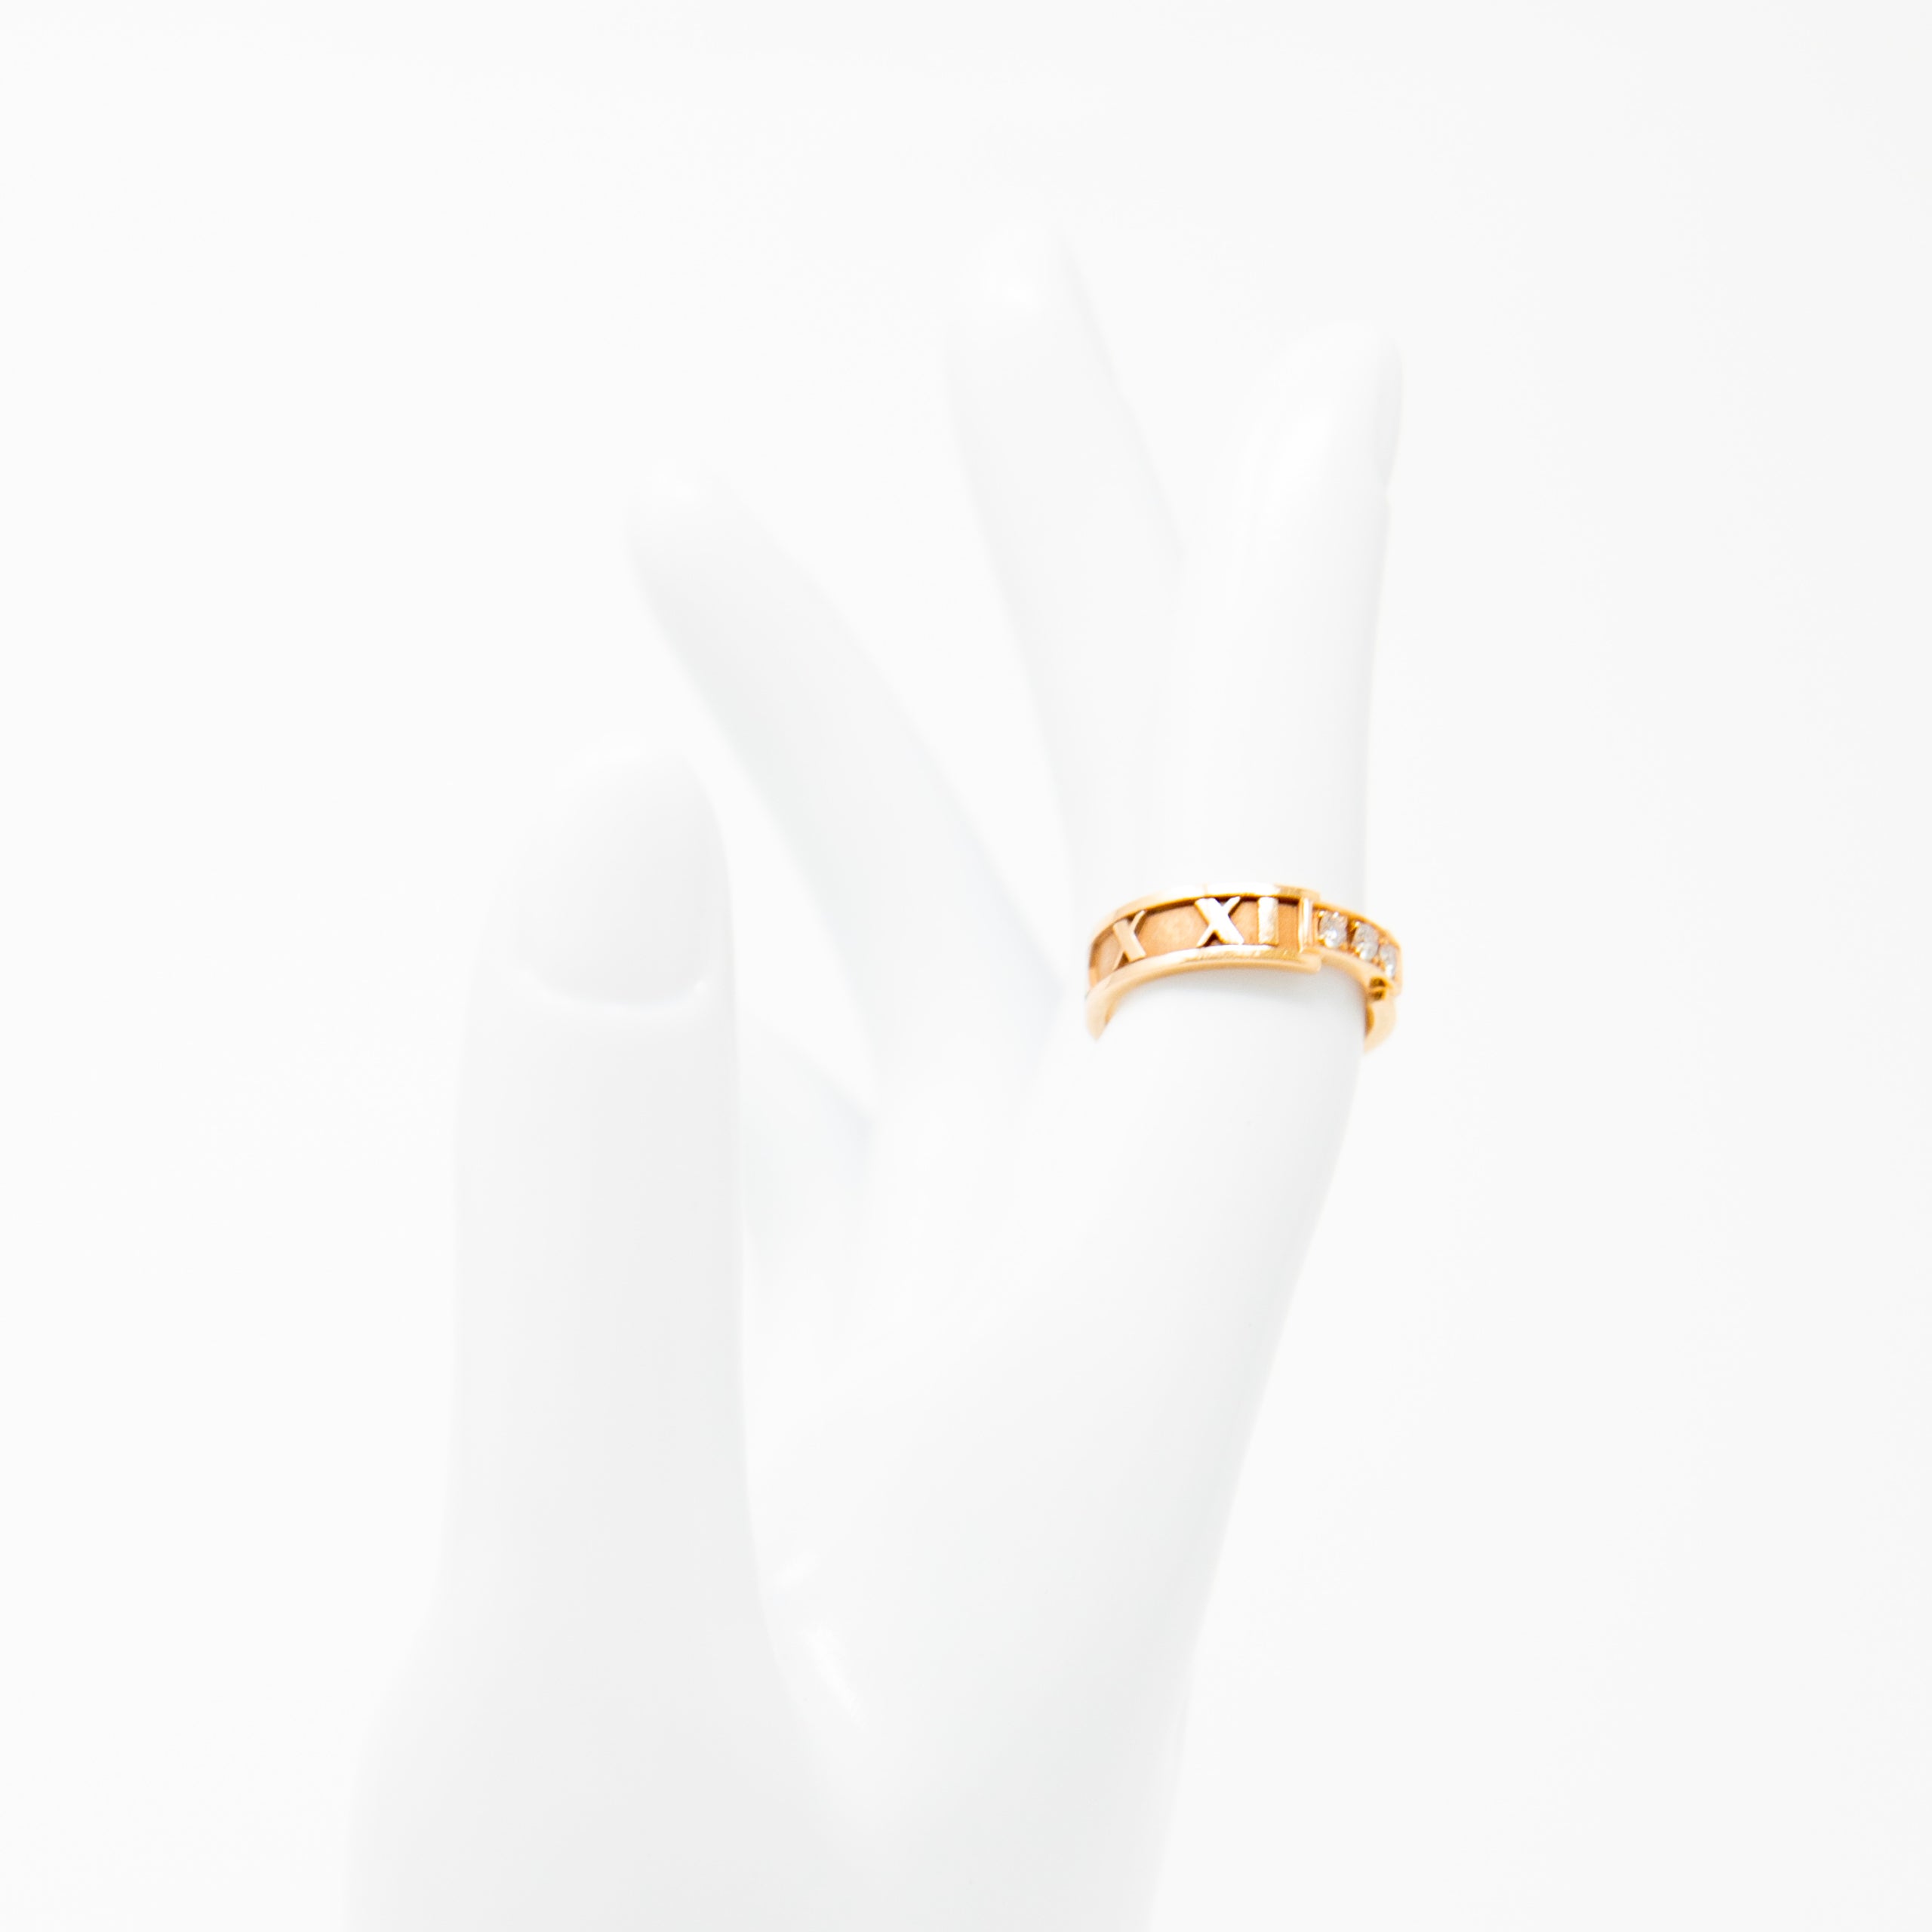 Tiffany & Co 18k Gold Atlas Diamond Ring